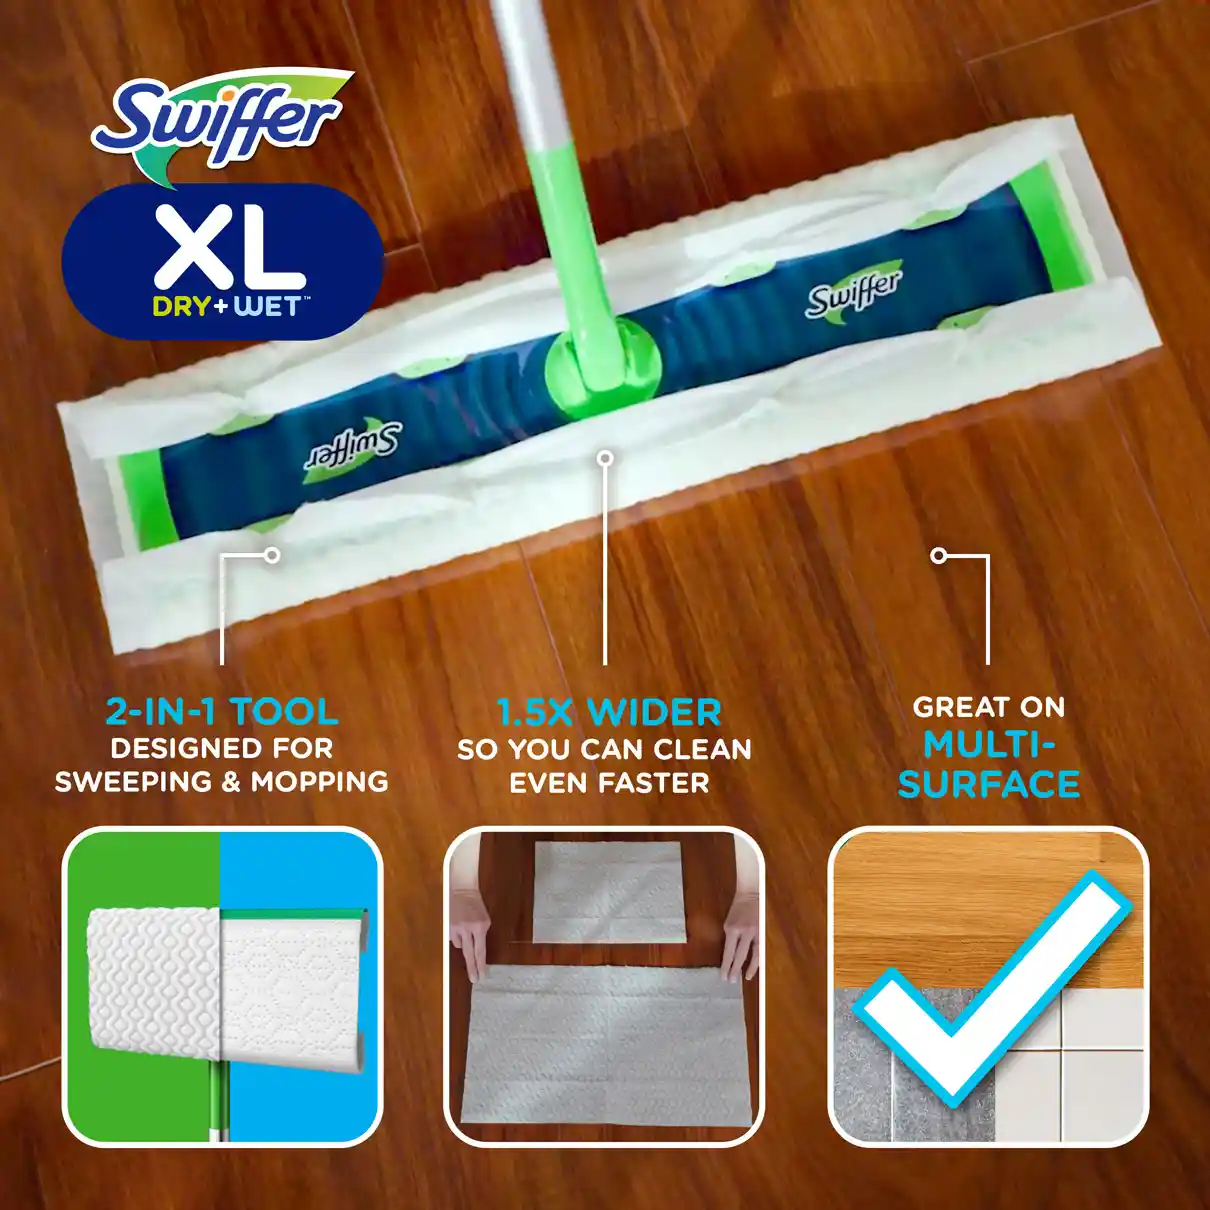 Swiffer XXL Duster kit 